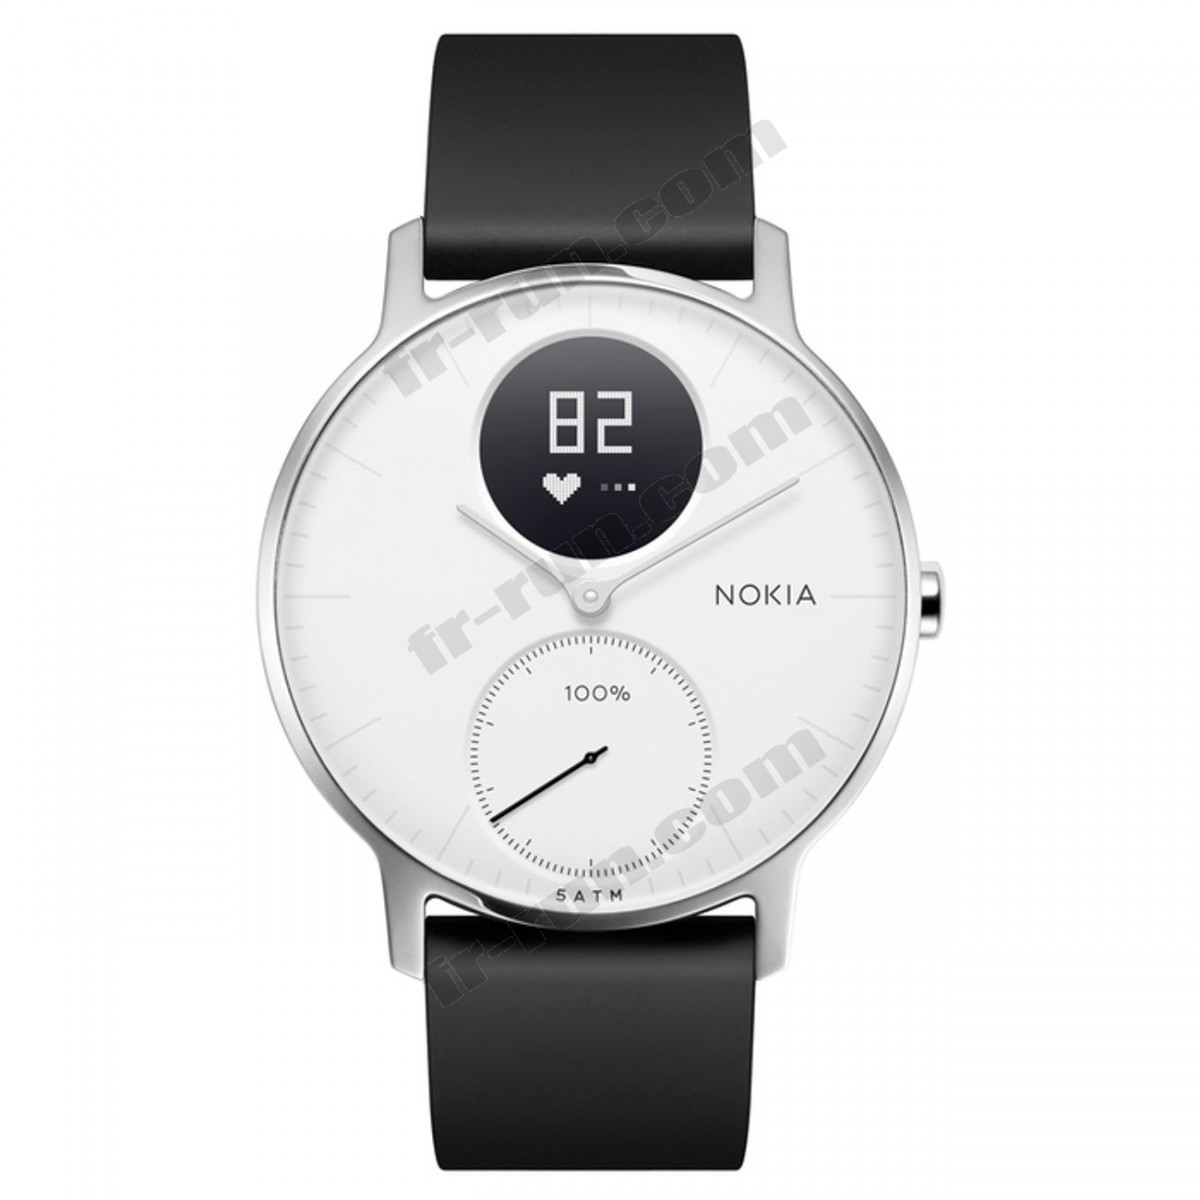 Nokia/MONTRE NOKIA STEEL HR (36MM) ◇◇◇ Pas Cher Du Tout - Nokia/MONTRE NOKIA STEEL HR (36MM) ◇◇◇ Pas Cher Du Tout